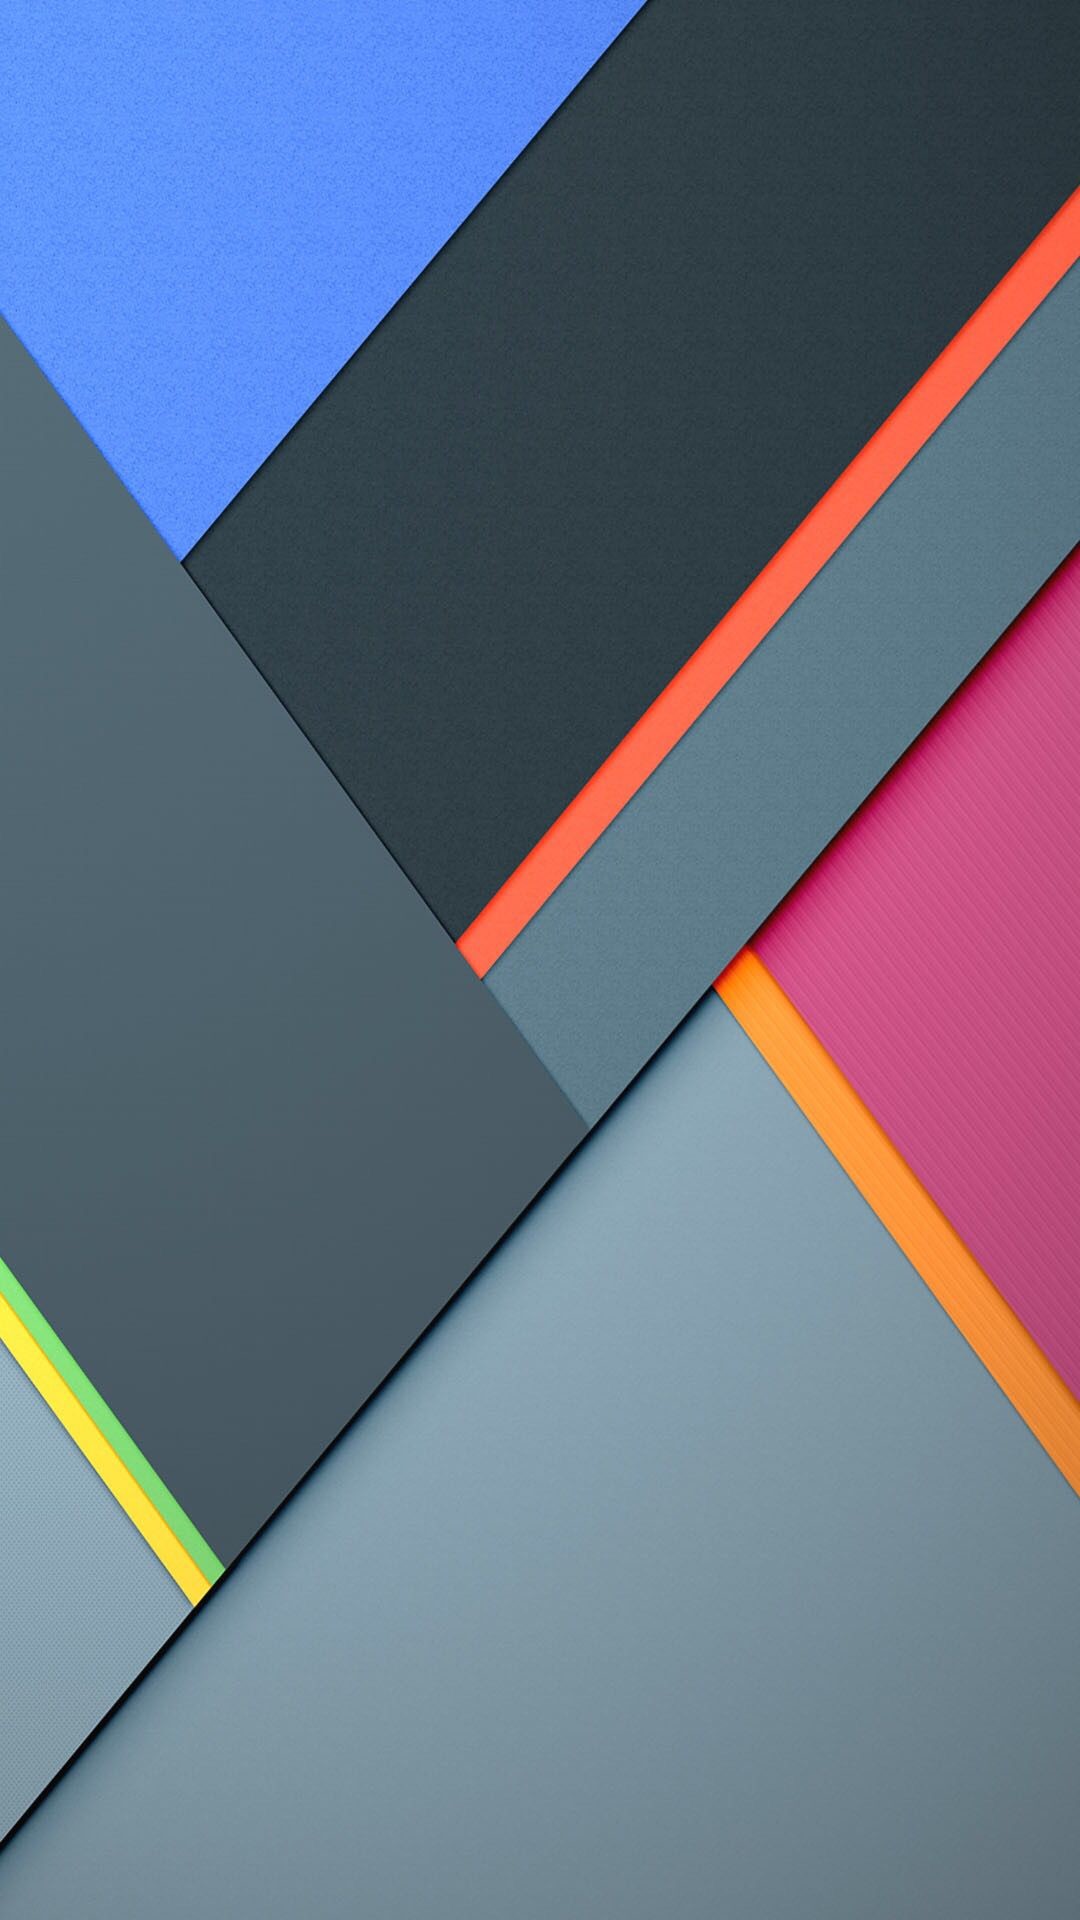 Geometric Wallpaper Android Kecbio